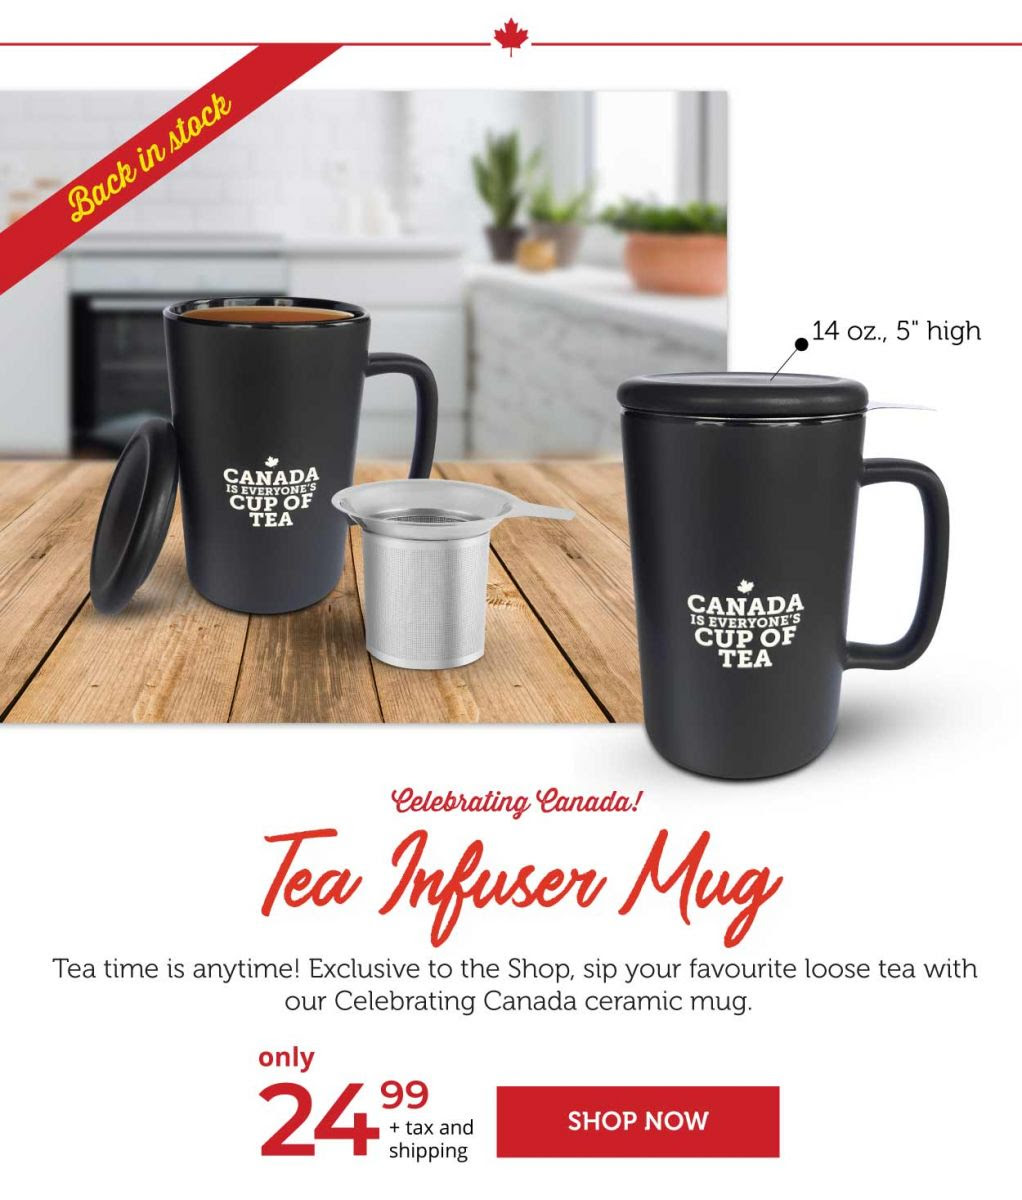 Tea Infuser Mugs